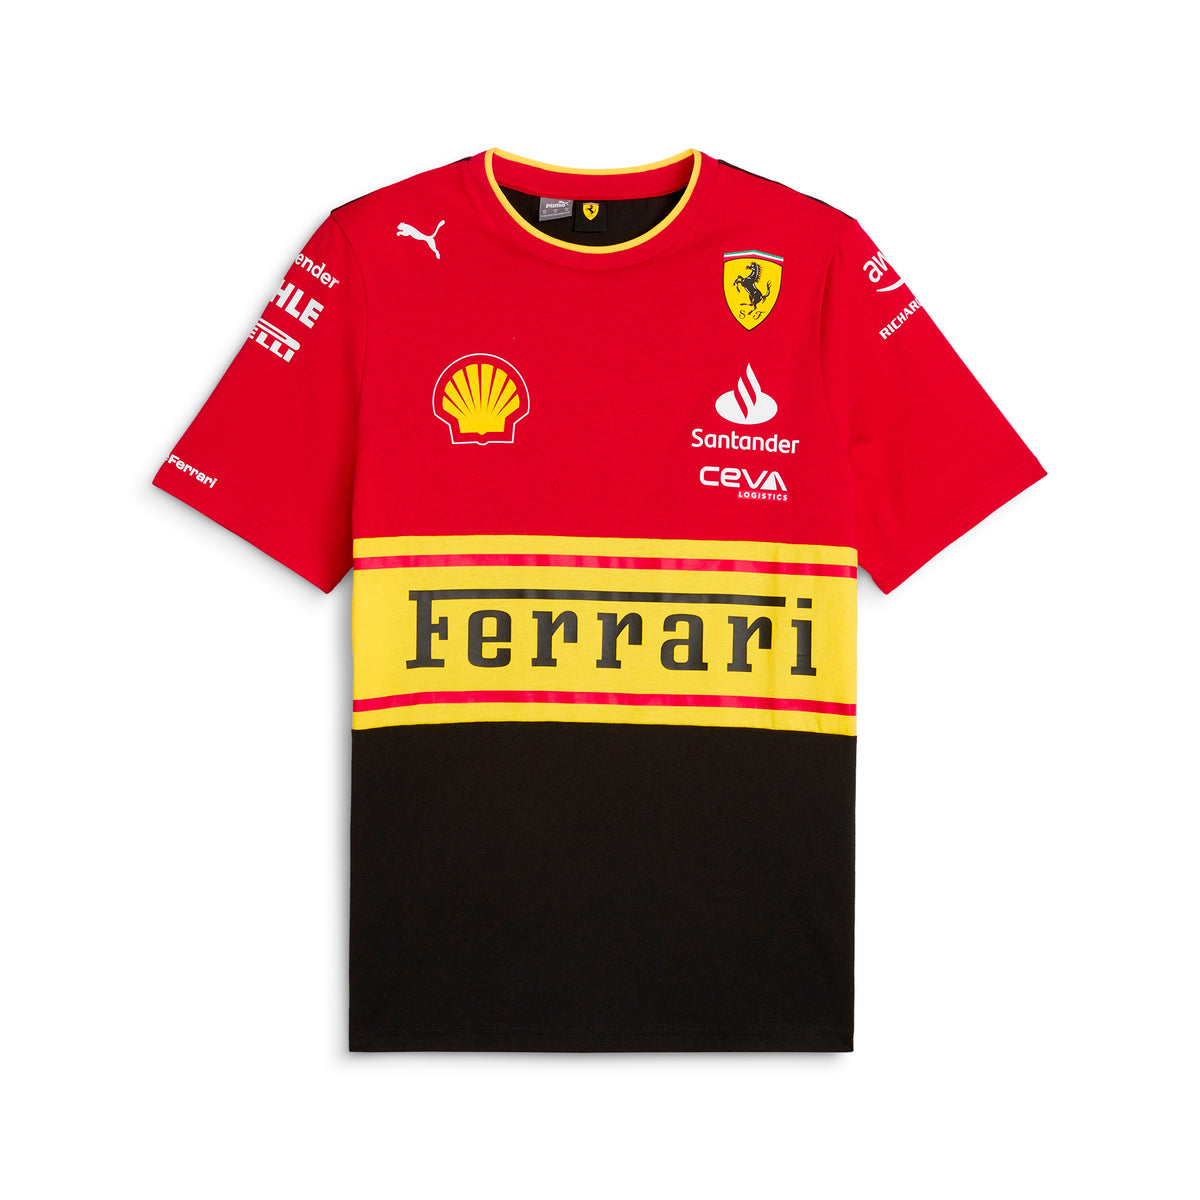 Limited edition Ferrari 2023 Monza Team T-skjorte